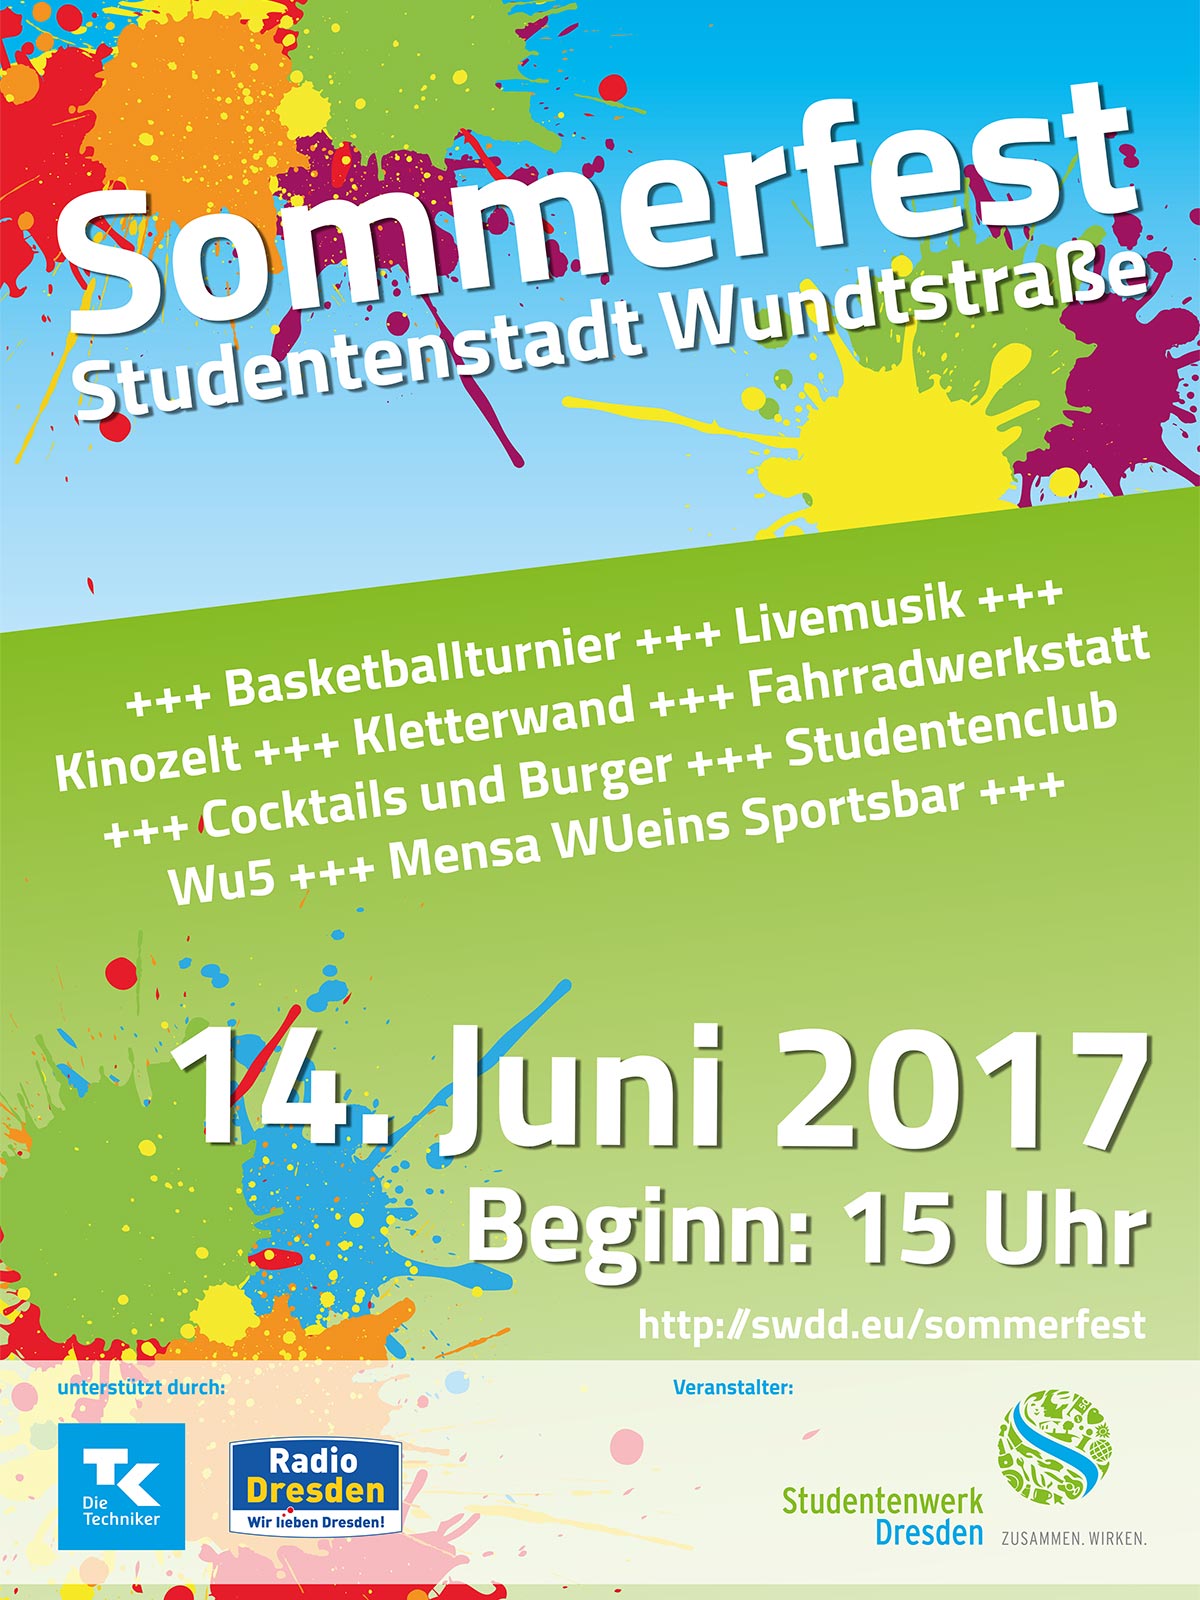 Plakat zu Sommerfest Wundtstraße am 14. Juni.